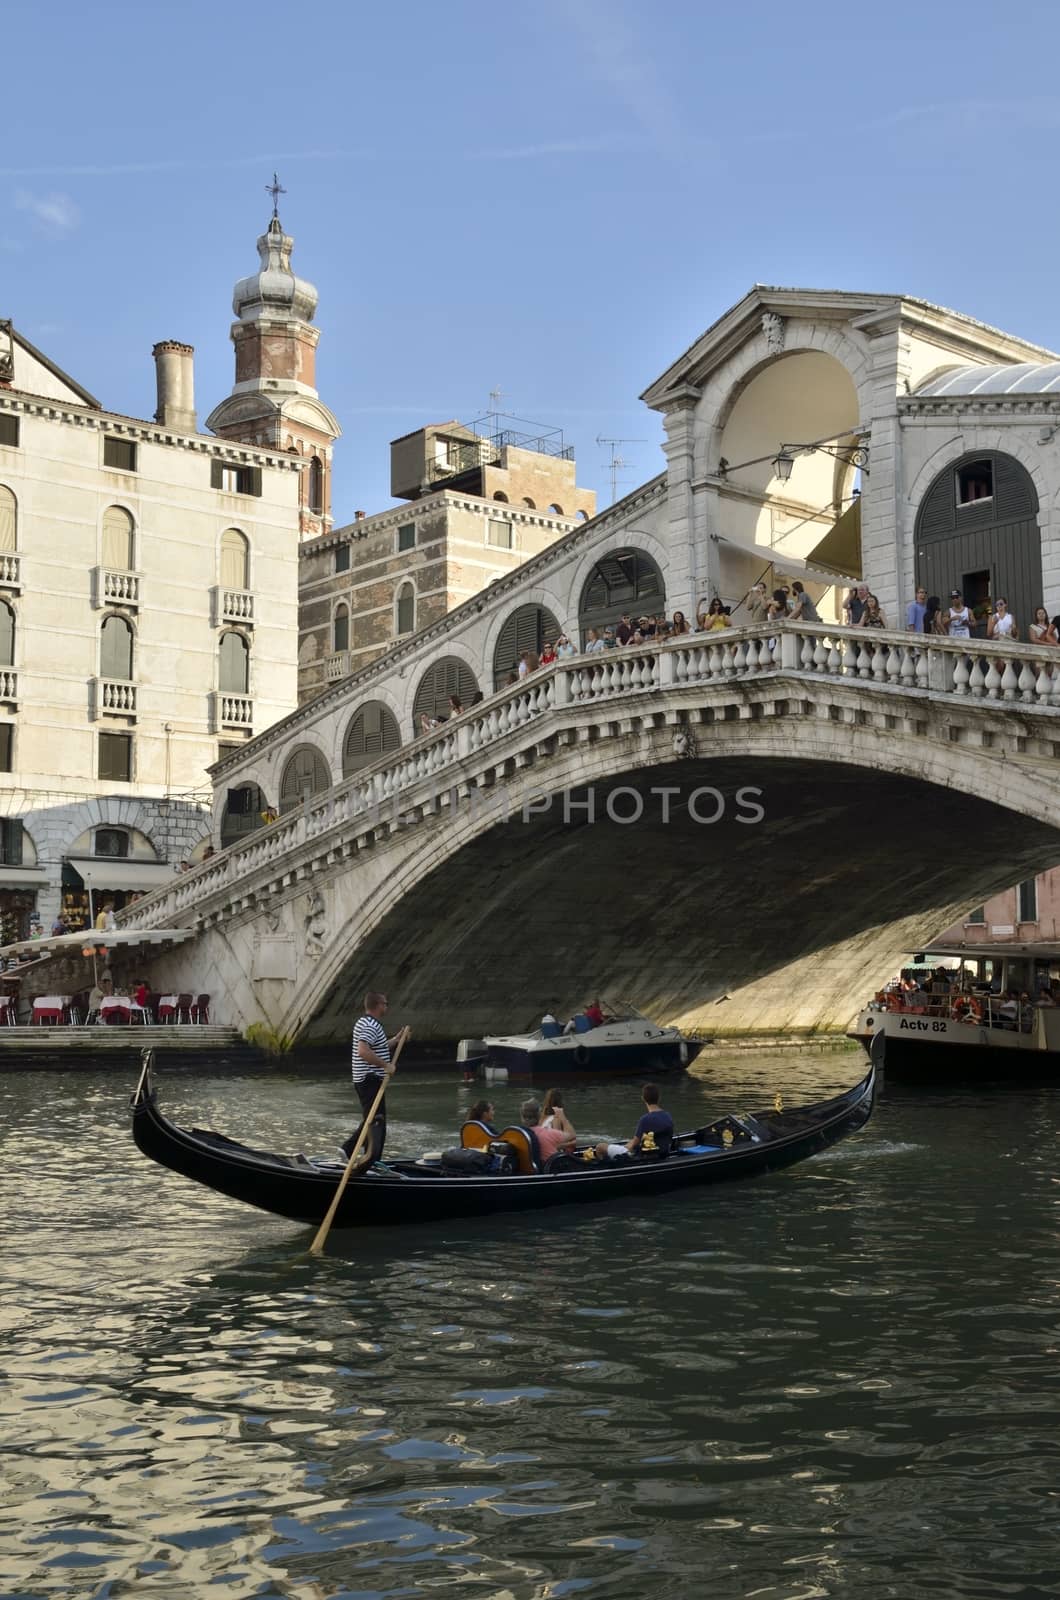 Gondola at the Rialto bridge by monysasi